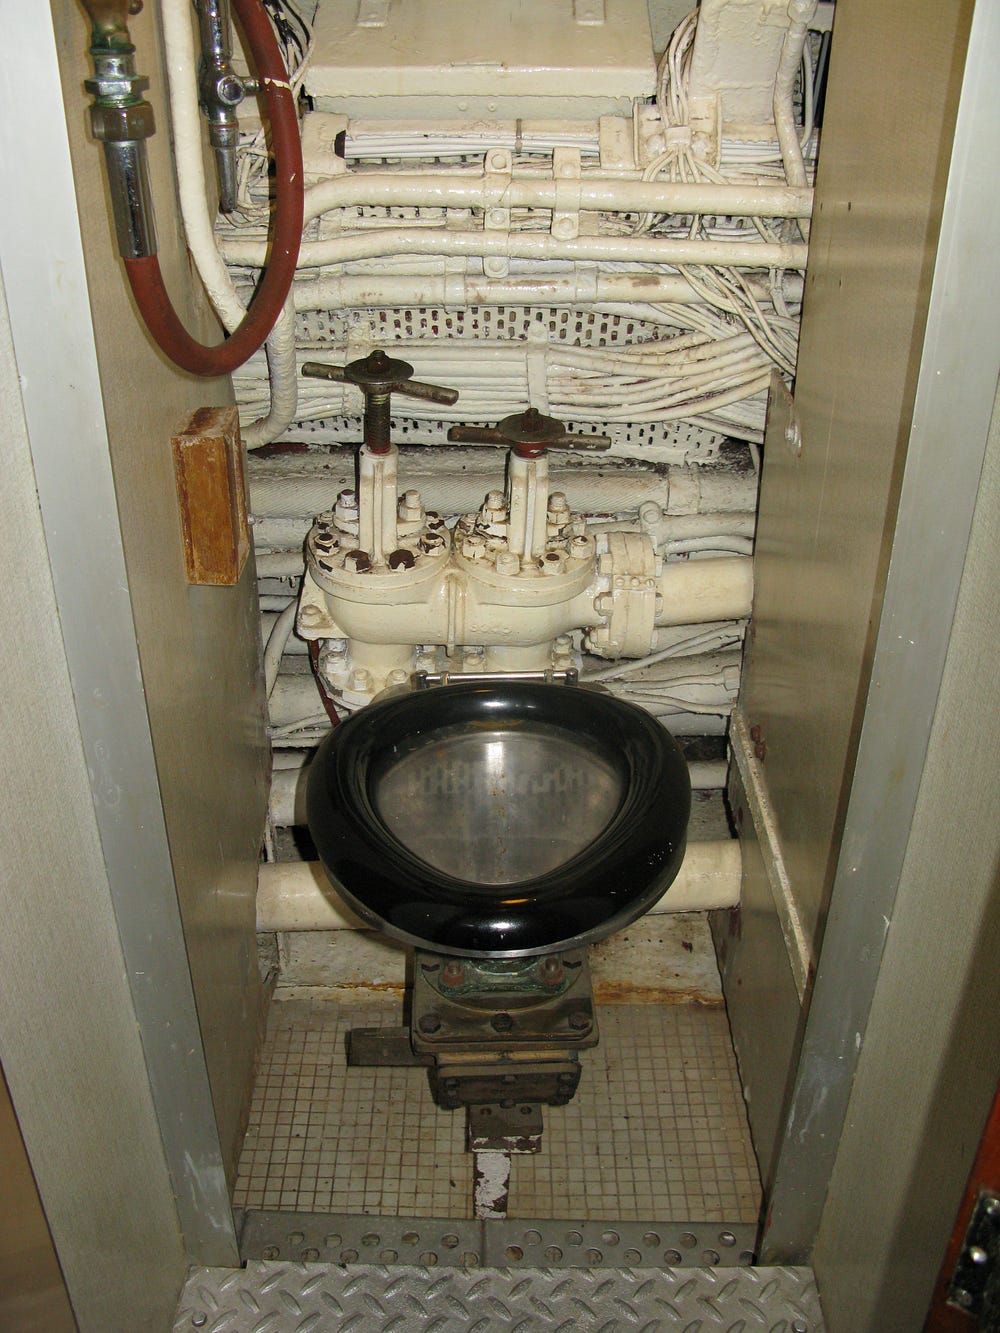 U-1206: Sank by Toilet | History of Yesterday